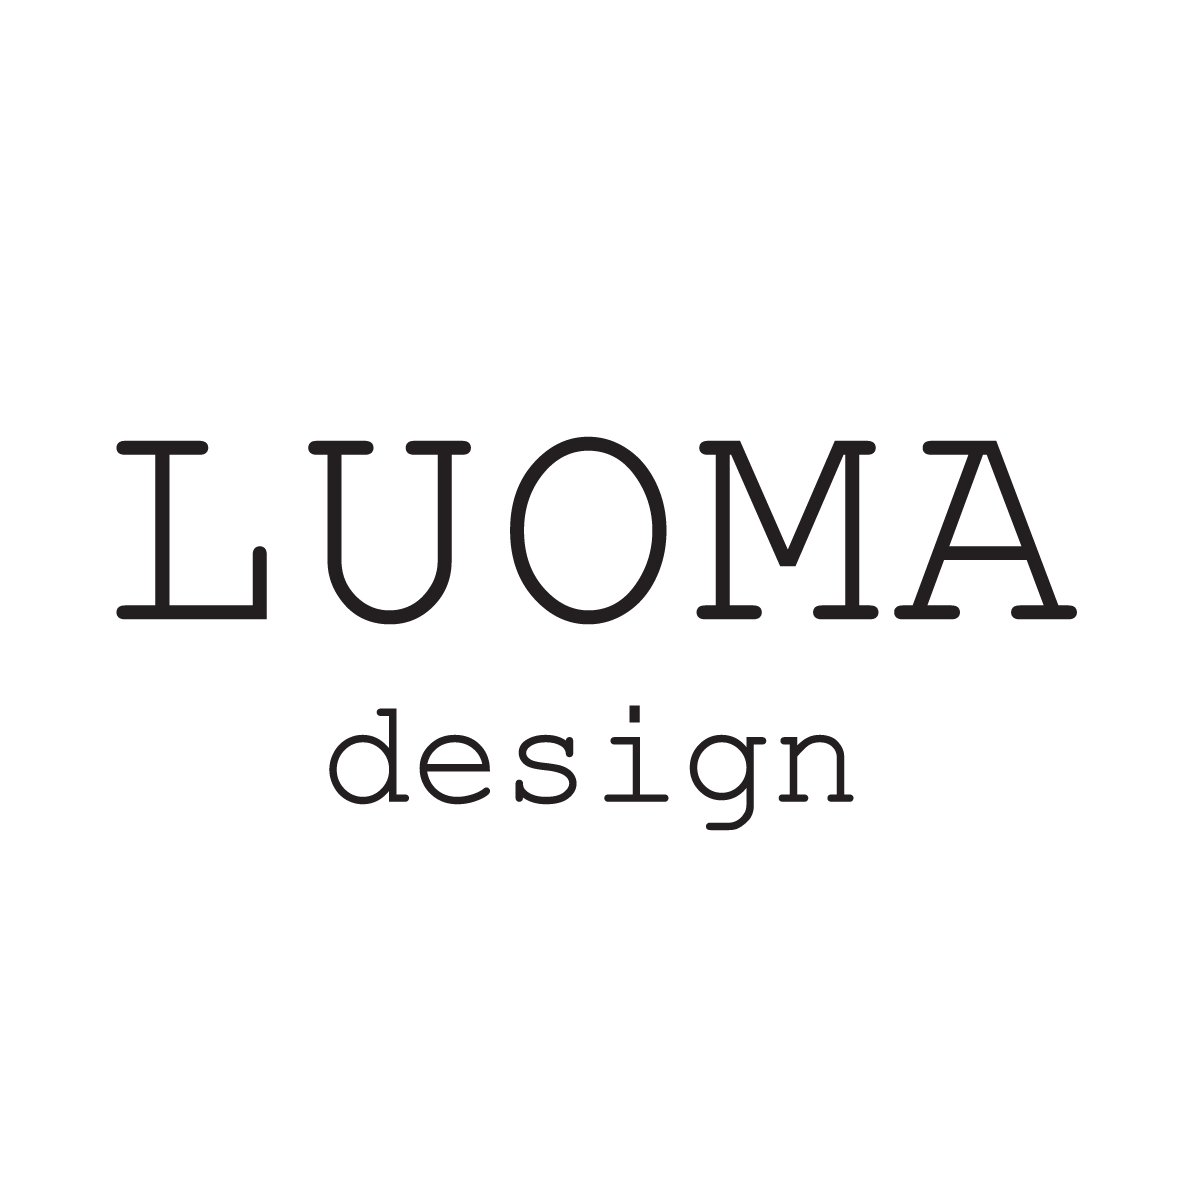 LUOMA design